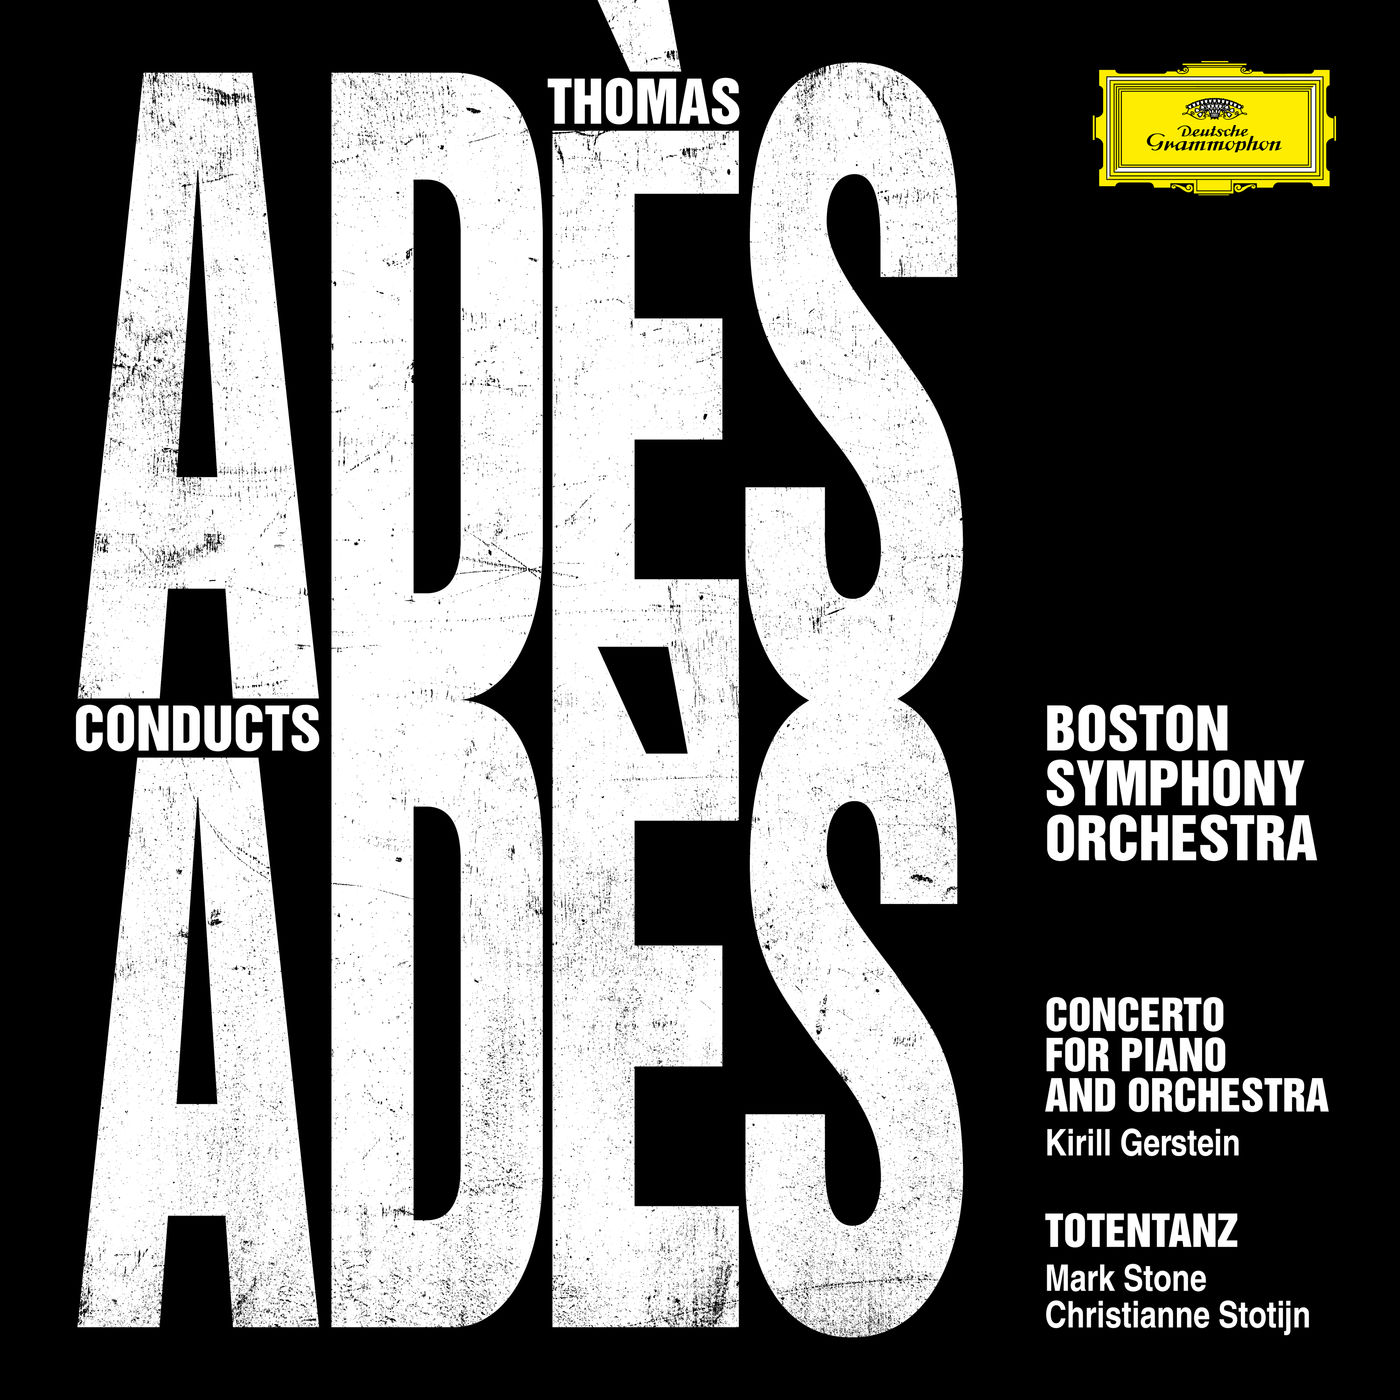 Boston Symphony Orchestra, Mark Stone, Christianne Stotijn, Kirill Gerstein, Thomas Ades – Ades Conducts Ades Boston (2020) [FLAC 24bit/96kHz]